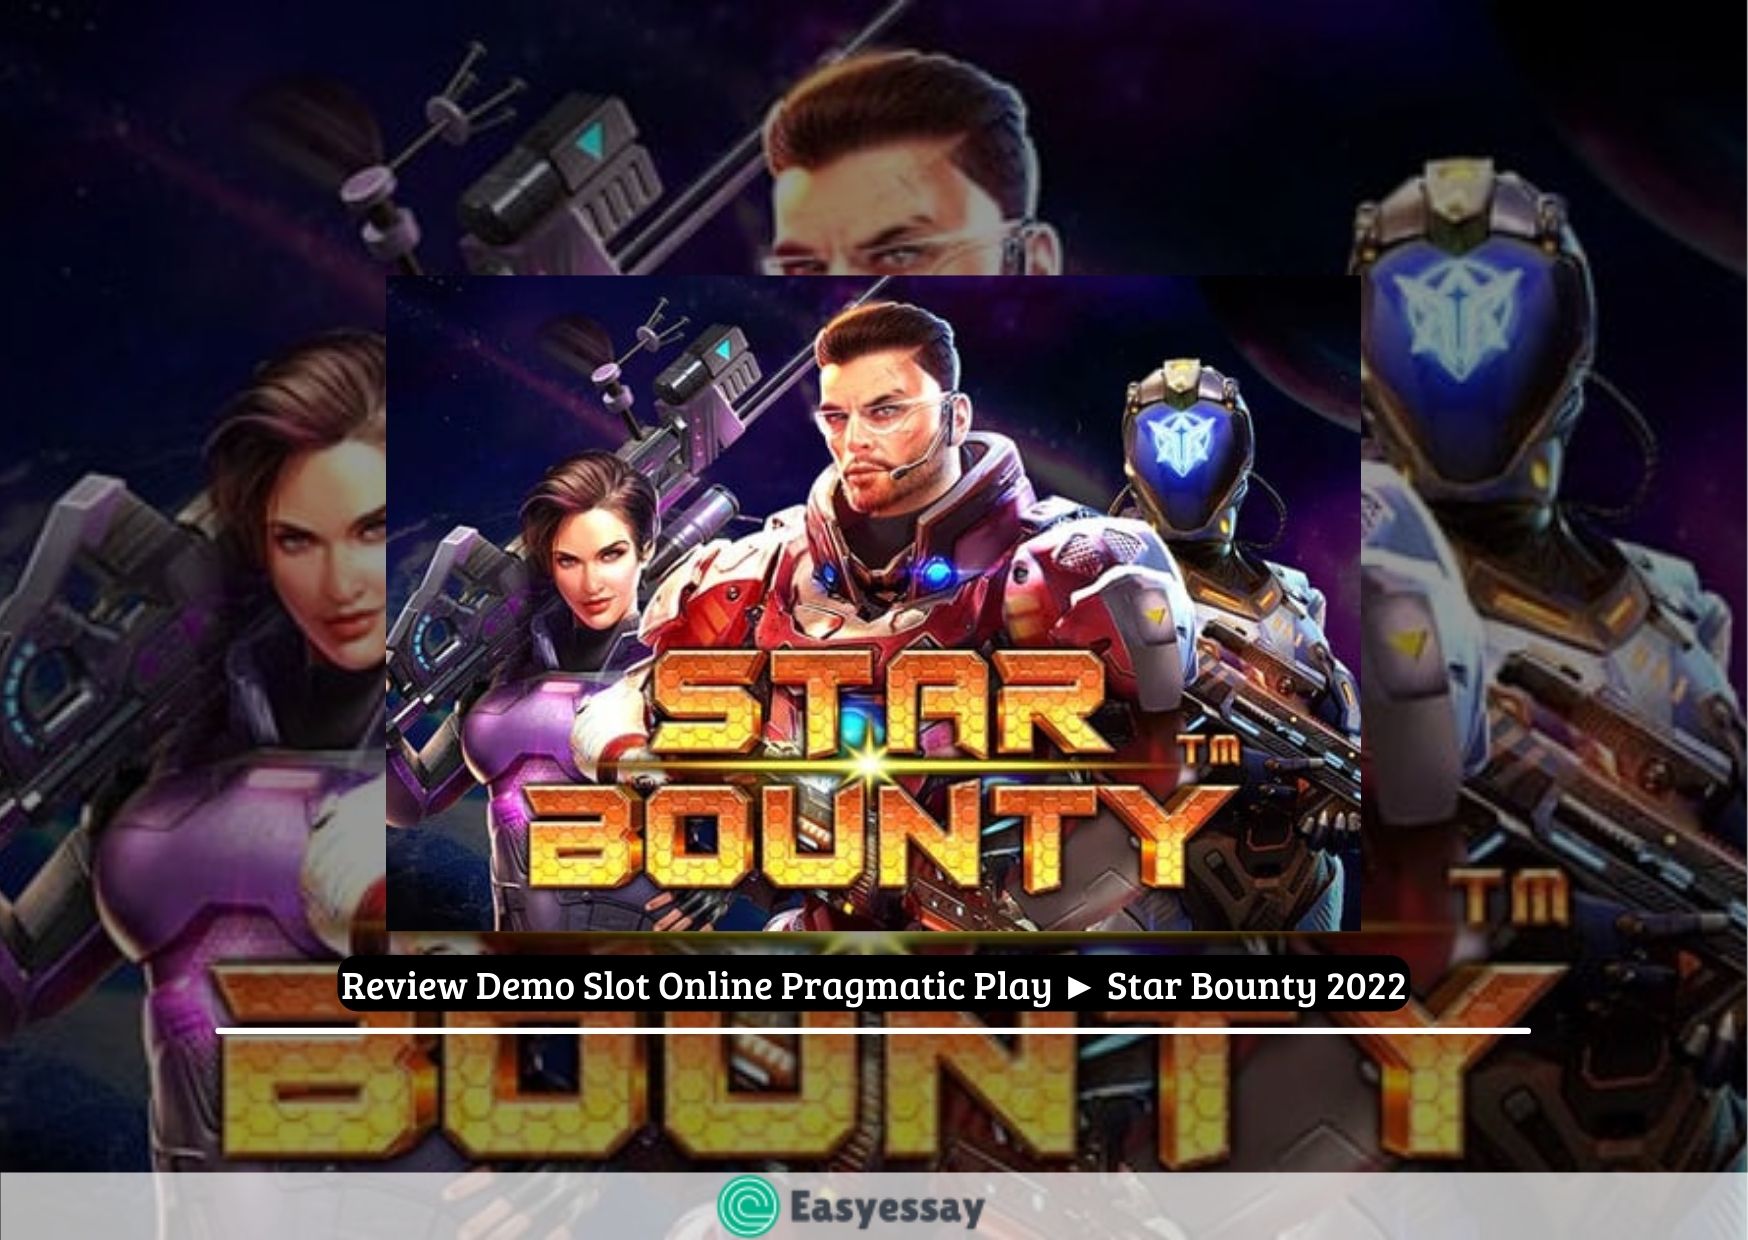 Review Demo Slot Online Pragmatic Play ► Star Bounty 2022